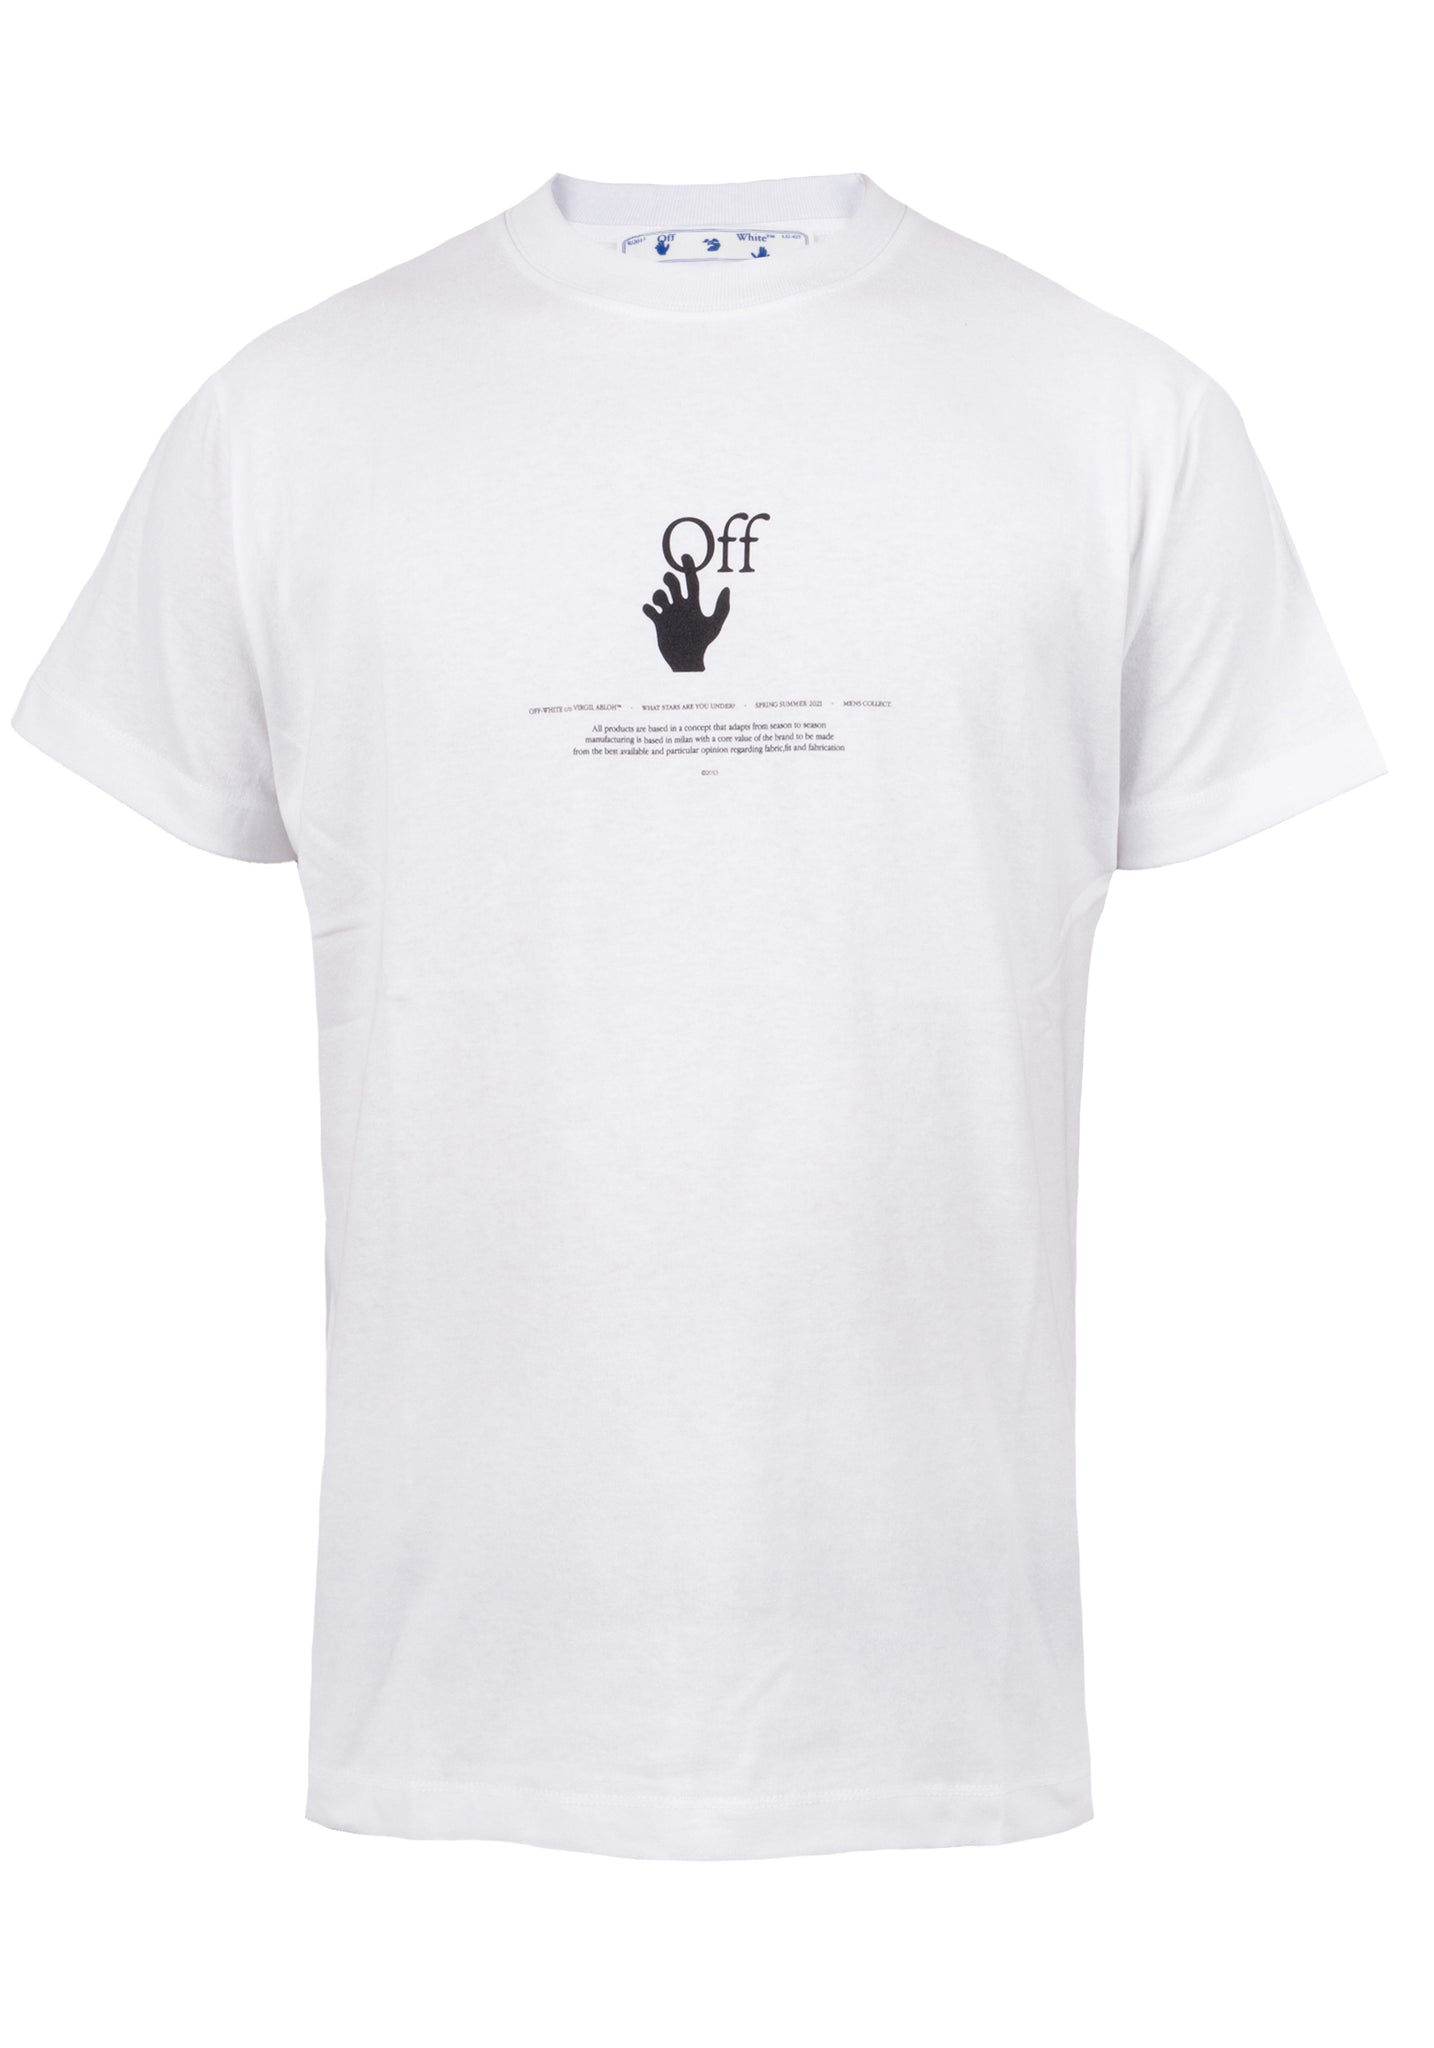 Off White Herren T-Shirt – | HIGH GRAFF S/S RISE WHITE OVER